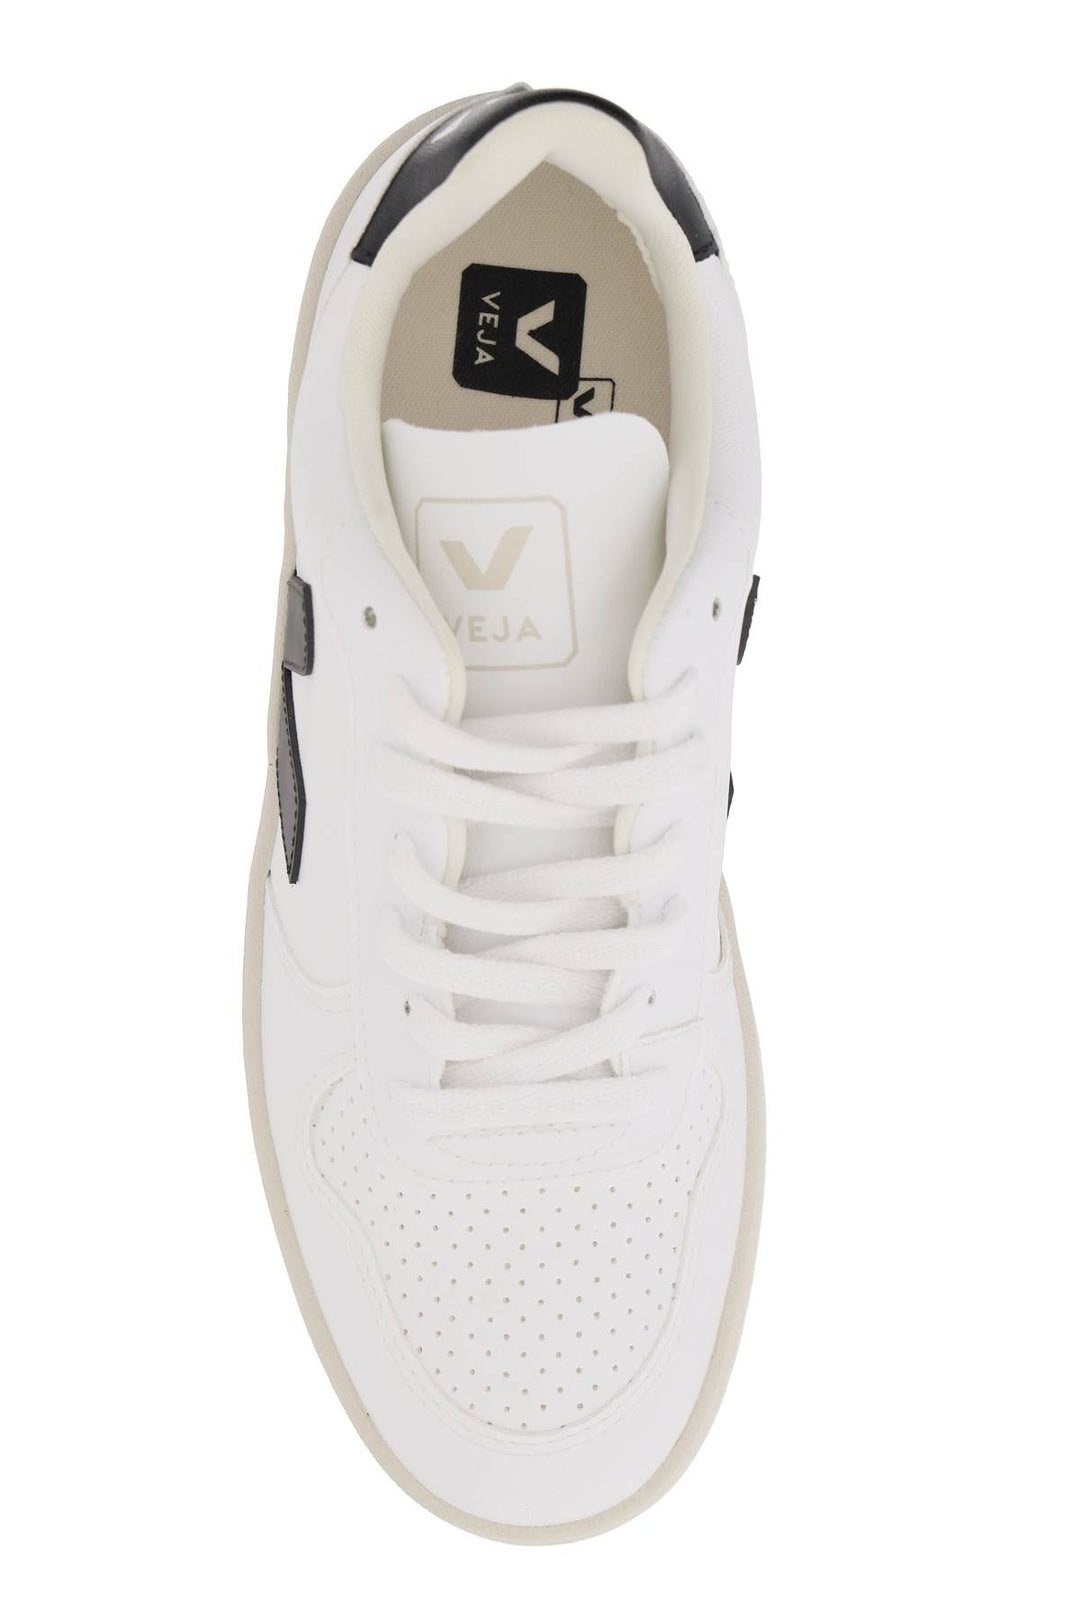 Veja V 10 Leather Sneakers   White